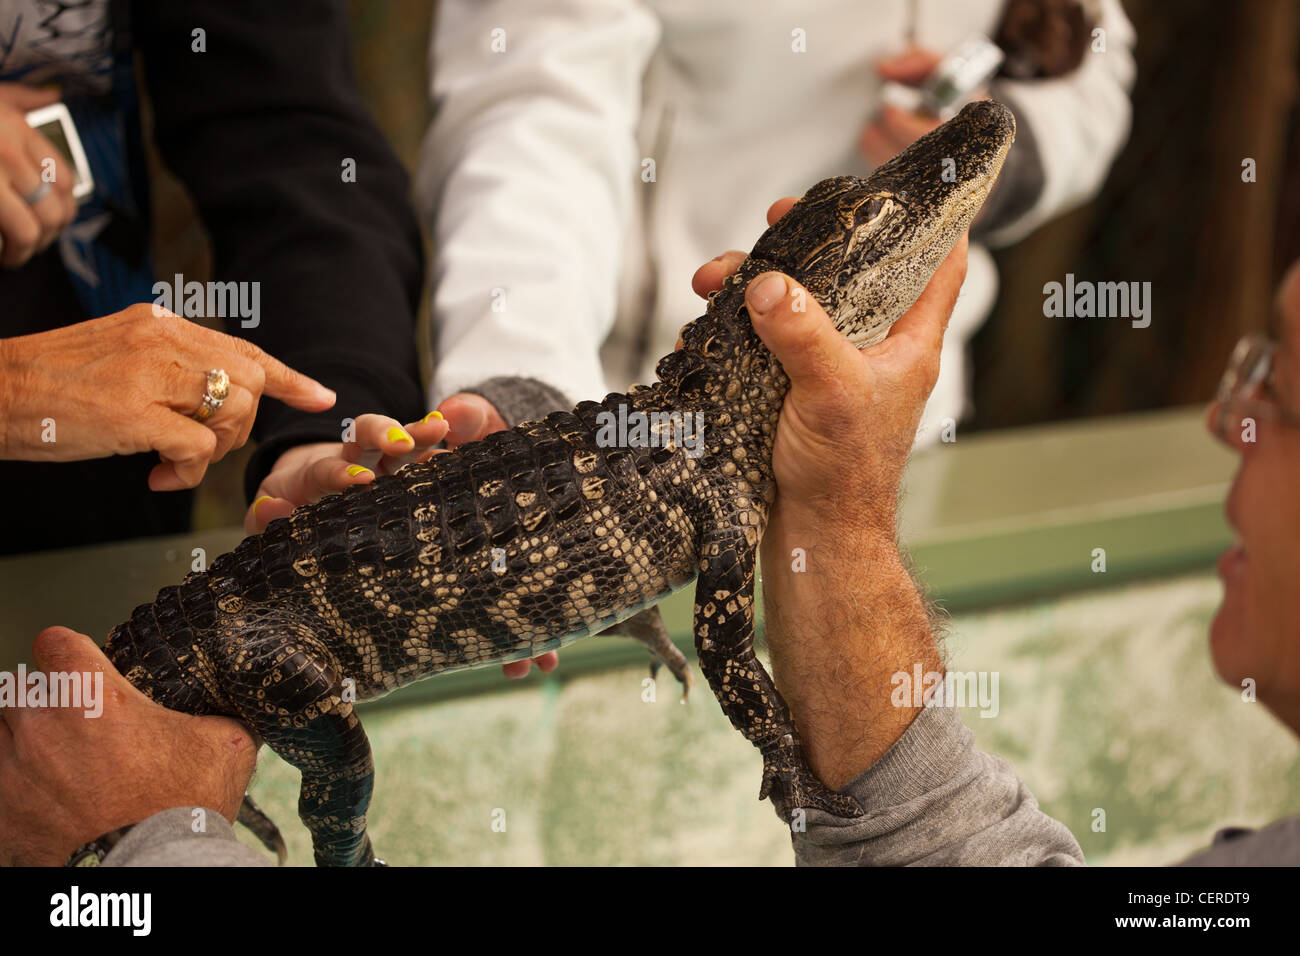 baby aligator at educational establishment, Stock Photo